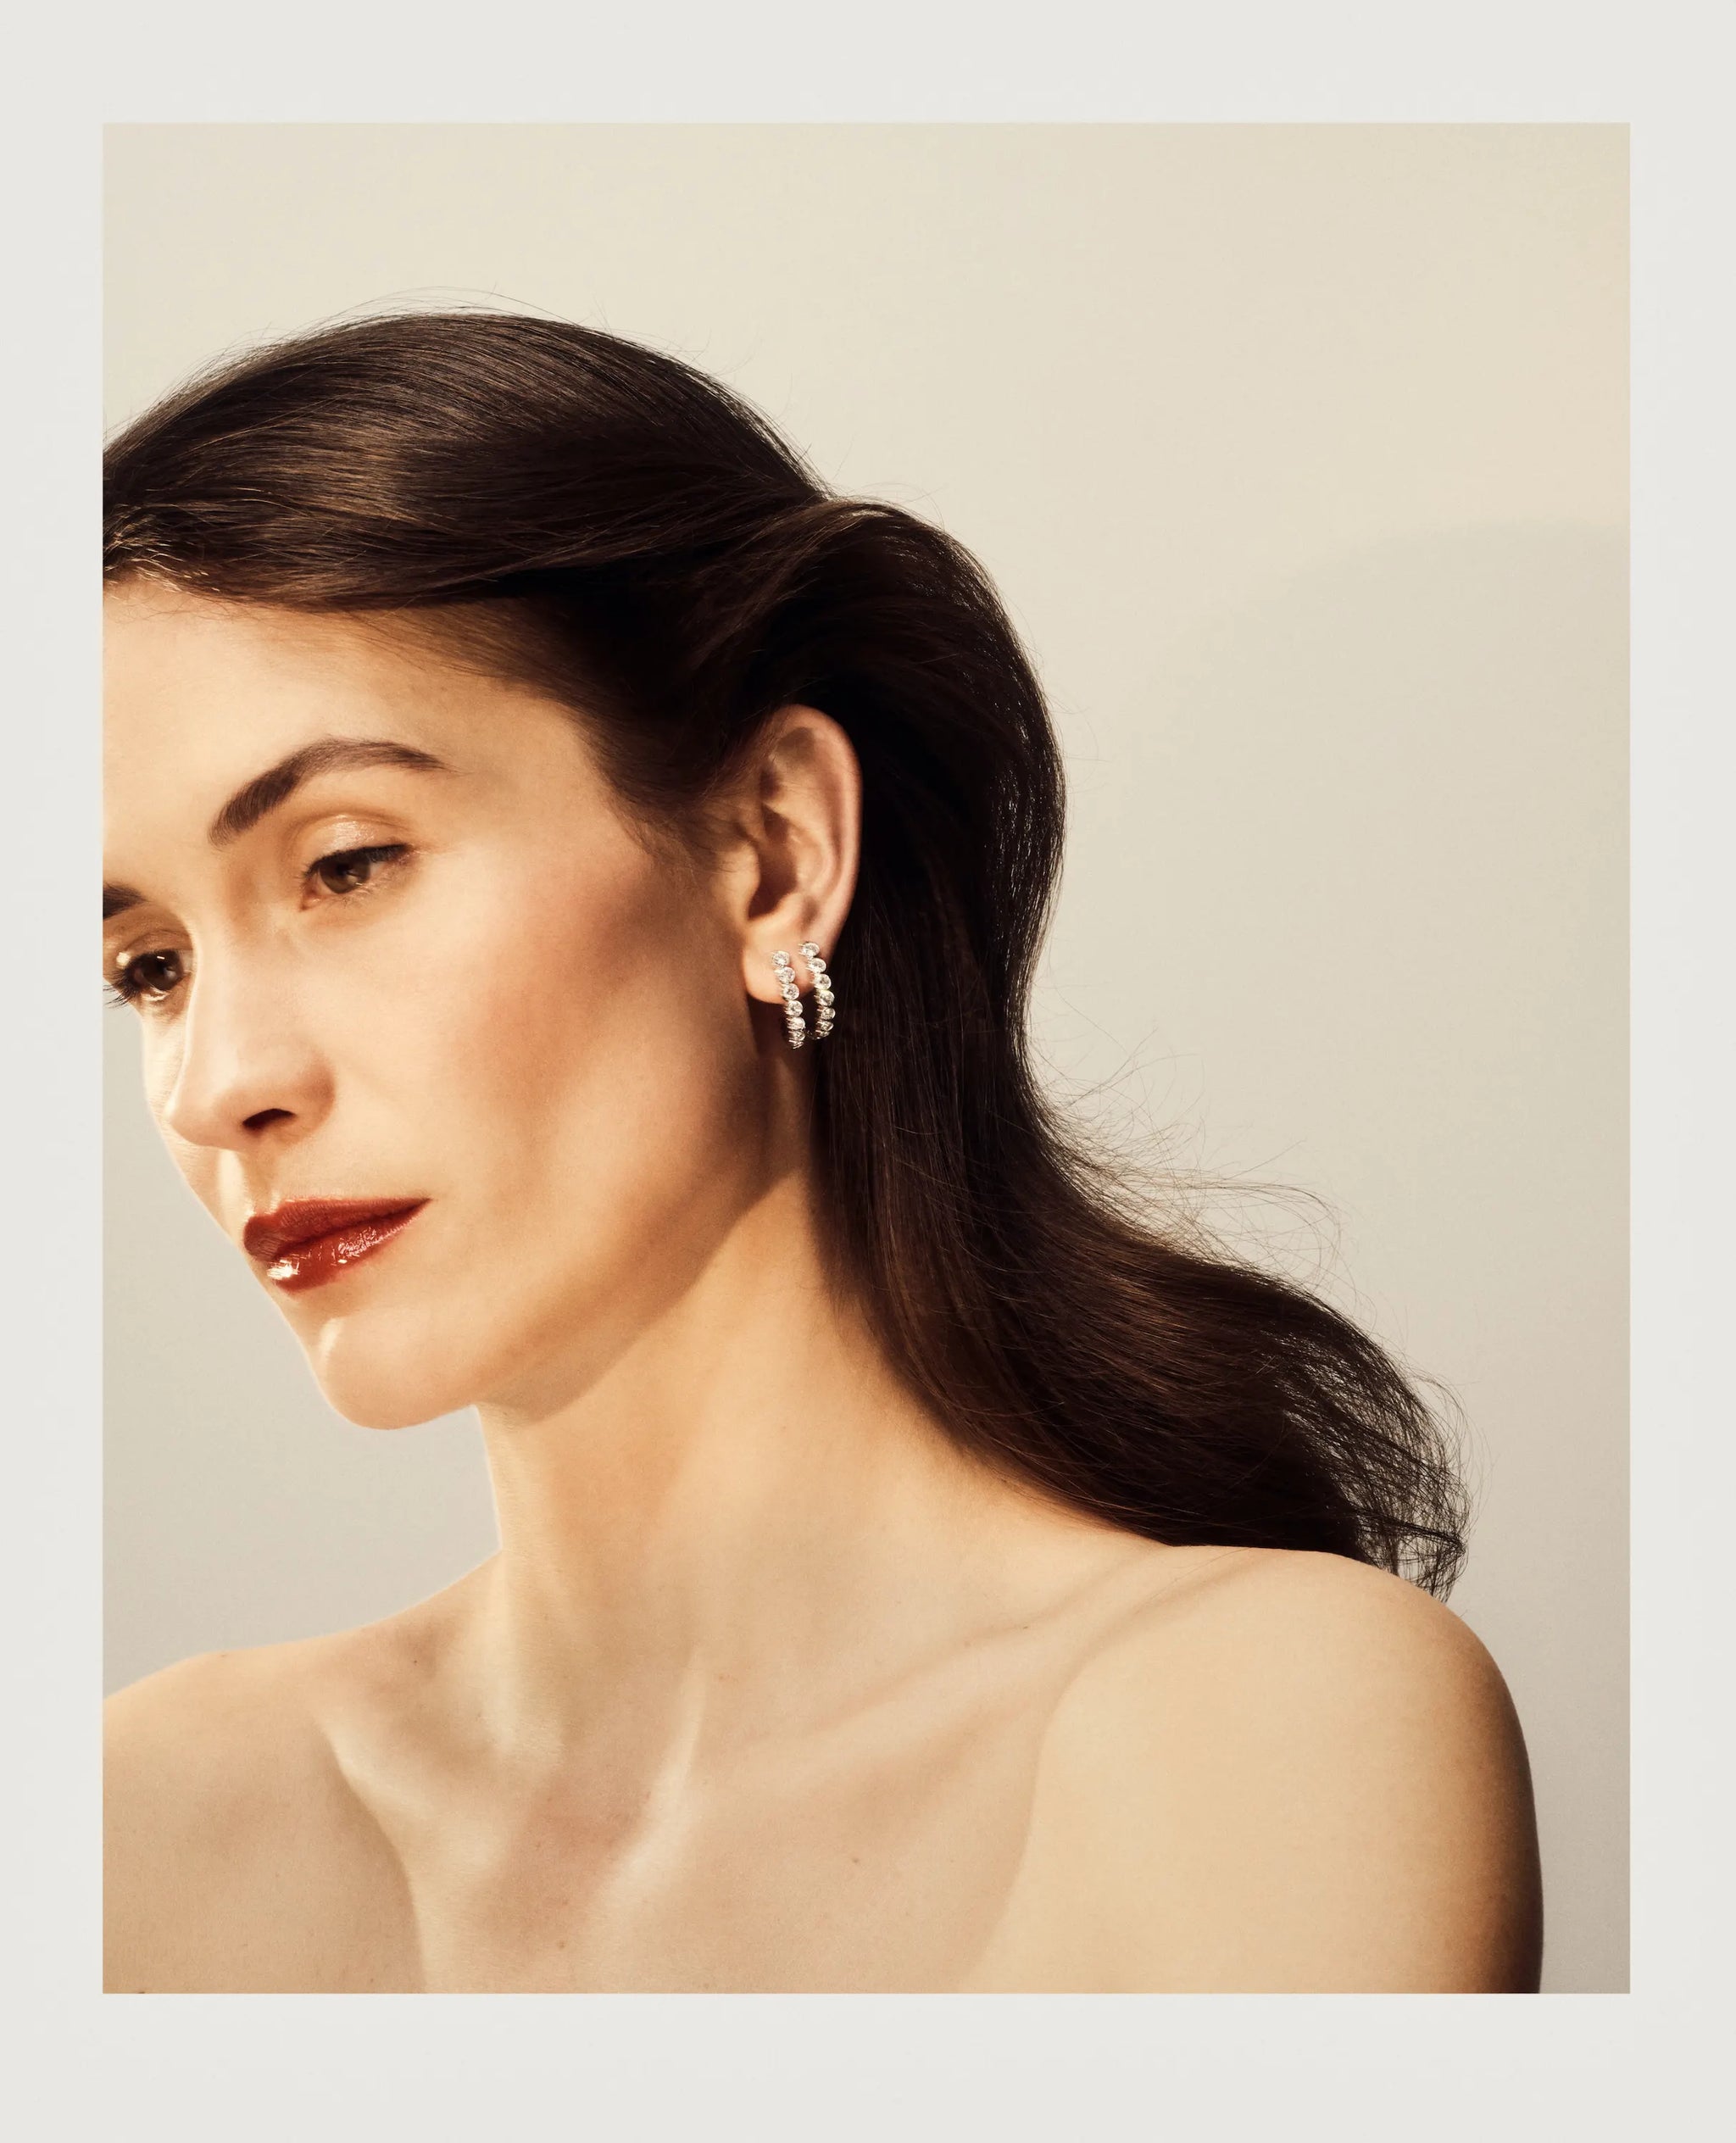 Model wearing Boucle Ensemble blanc diamond earrings